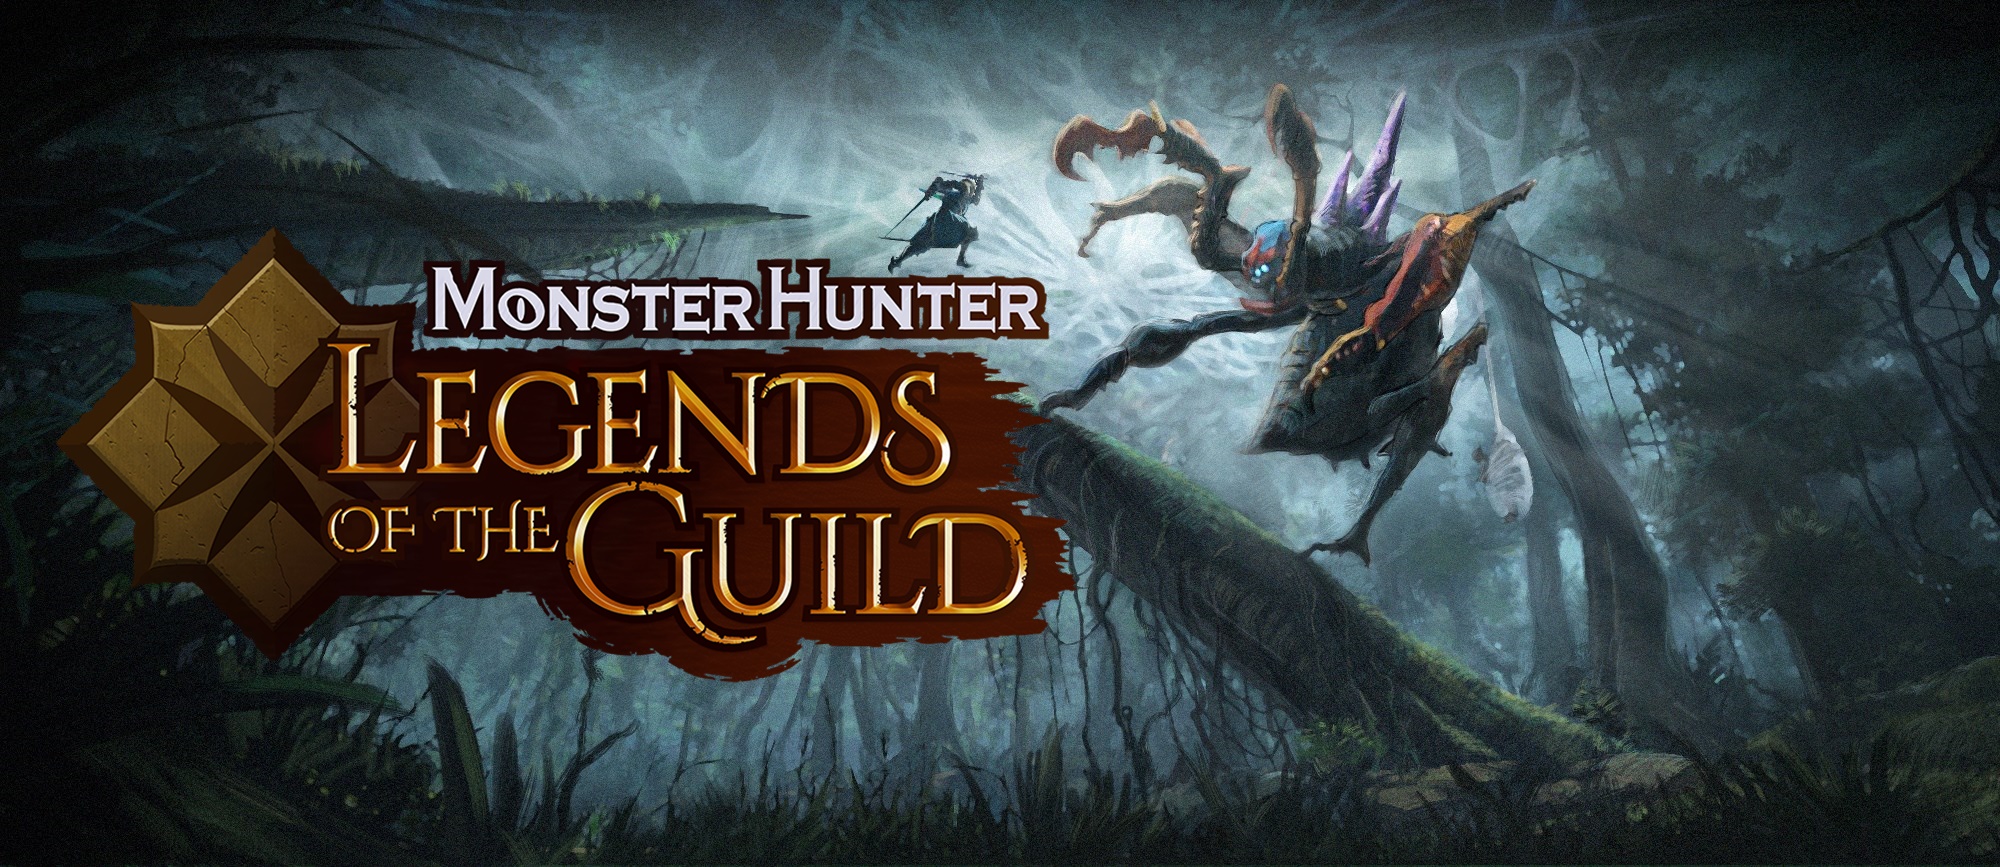 legend of the guild monster hunter